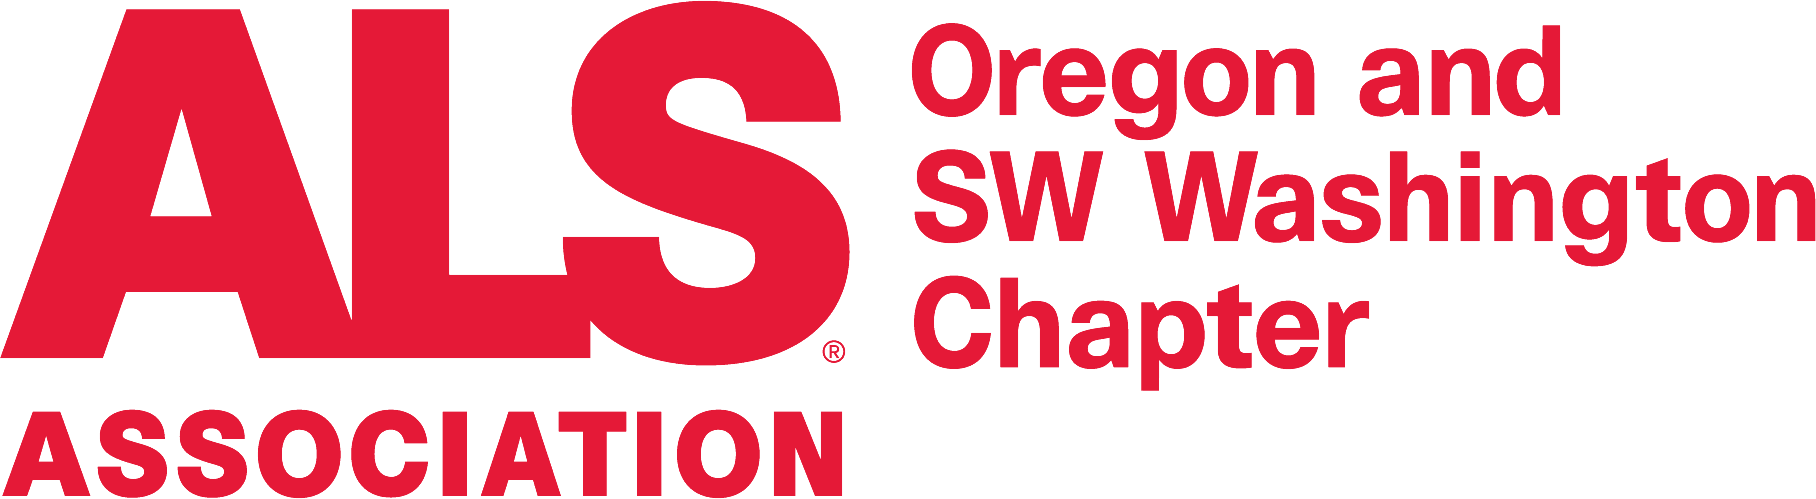 ALS Oregon and SW Washington chapter logo